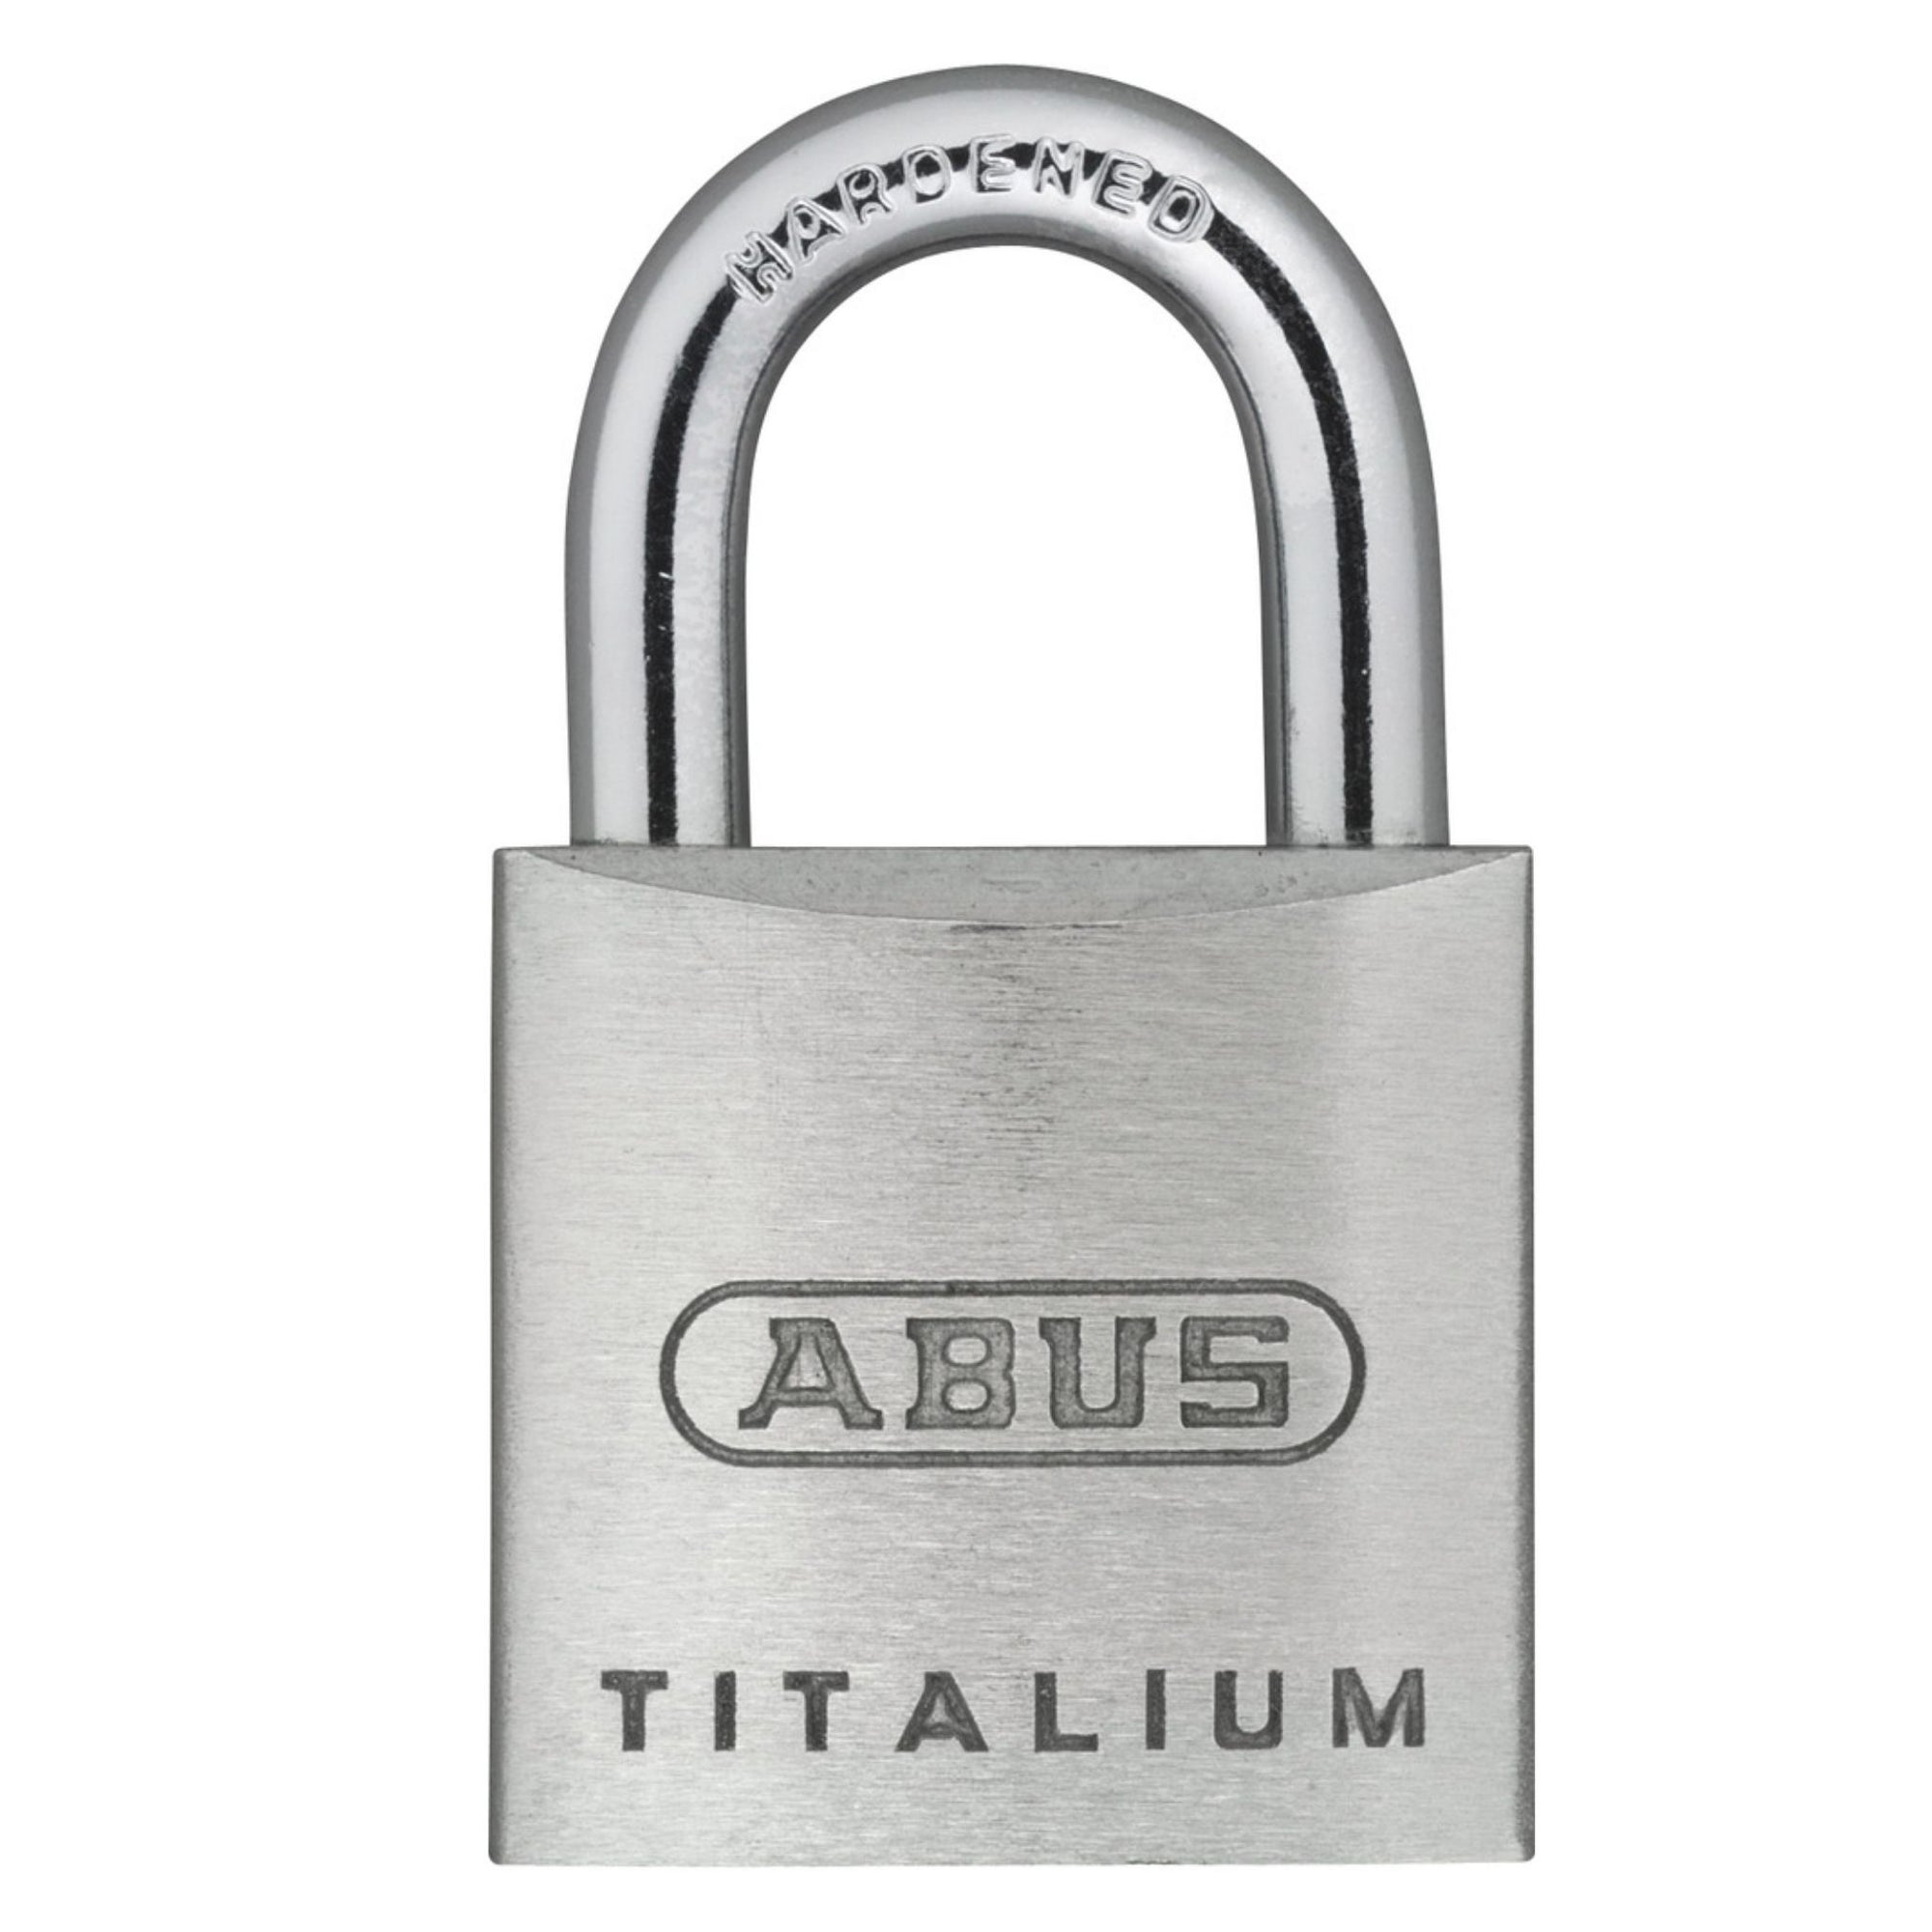 Abus 64TI/20 KA 6211 Titalium Padlock Keyed Alike to Match Existing Key Number KA6211 - The Lock Source